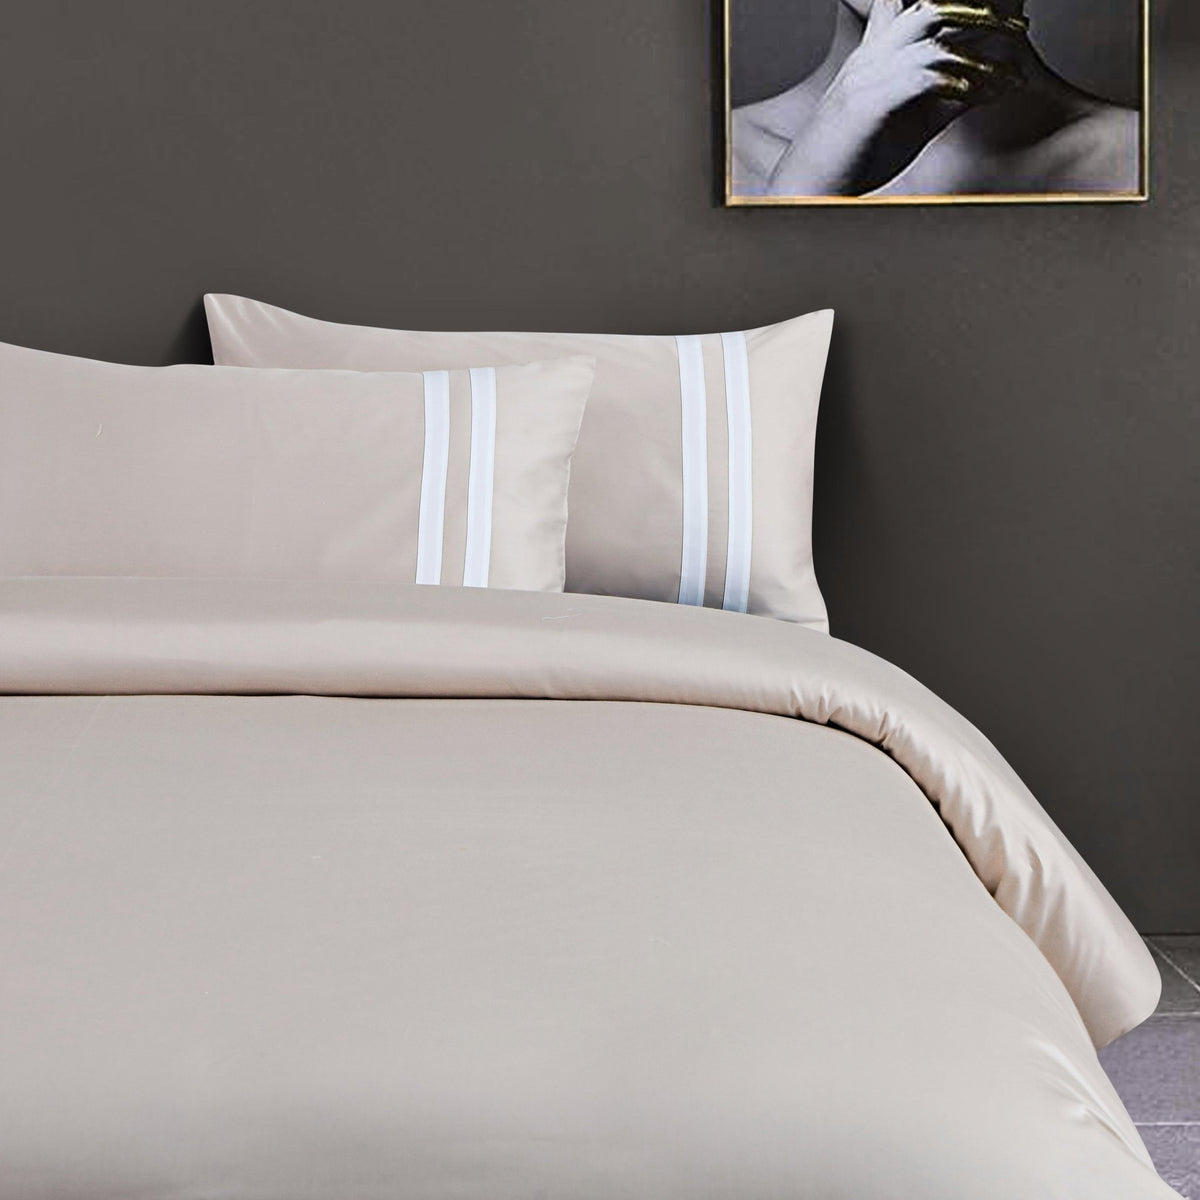 Malako Luxe 550TC 100% Cotton Light Beige King Size Plain Bedsheet with 2 Striped Pillow Cases - MALAKO